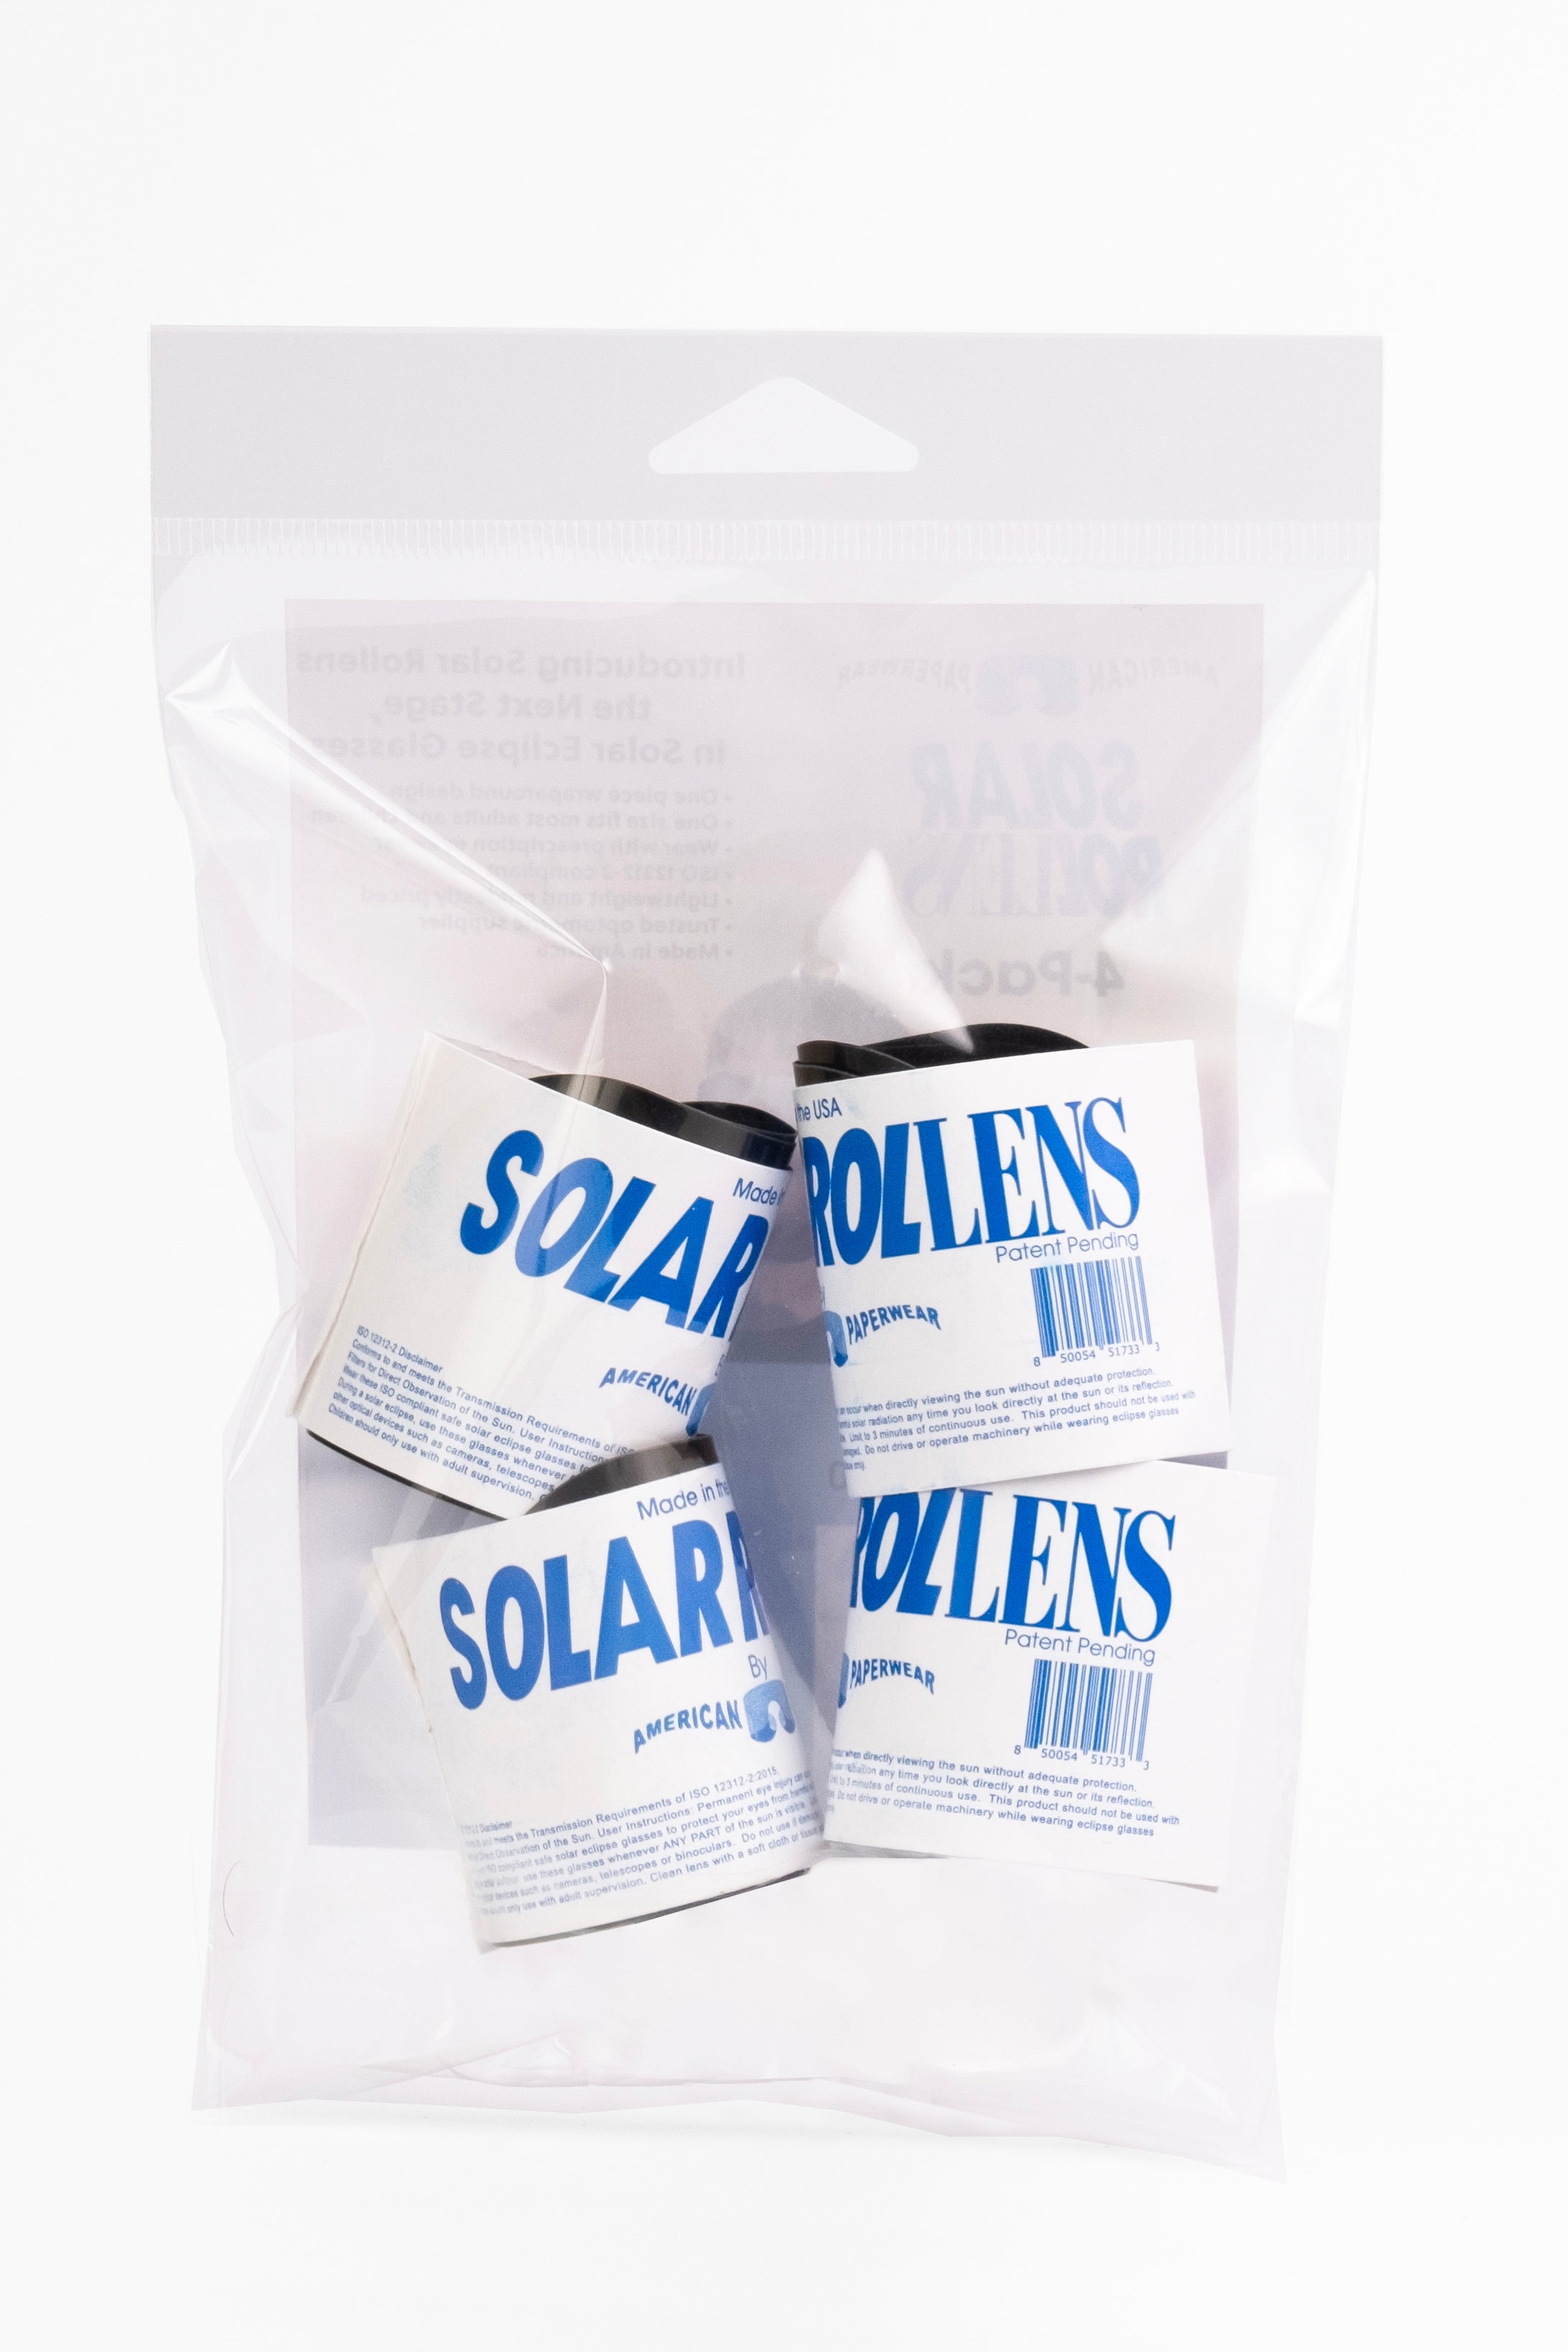 Solar Rollens, 4-packs